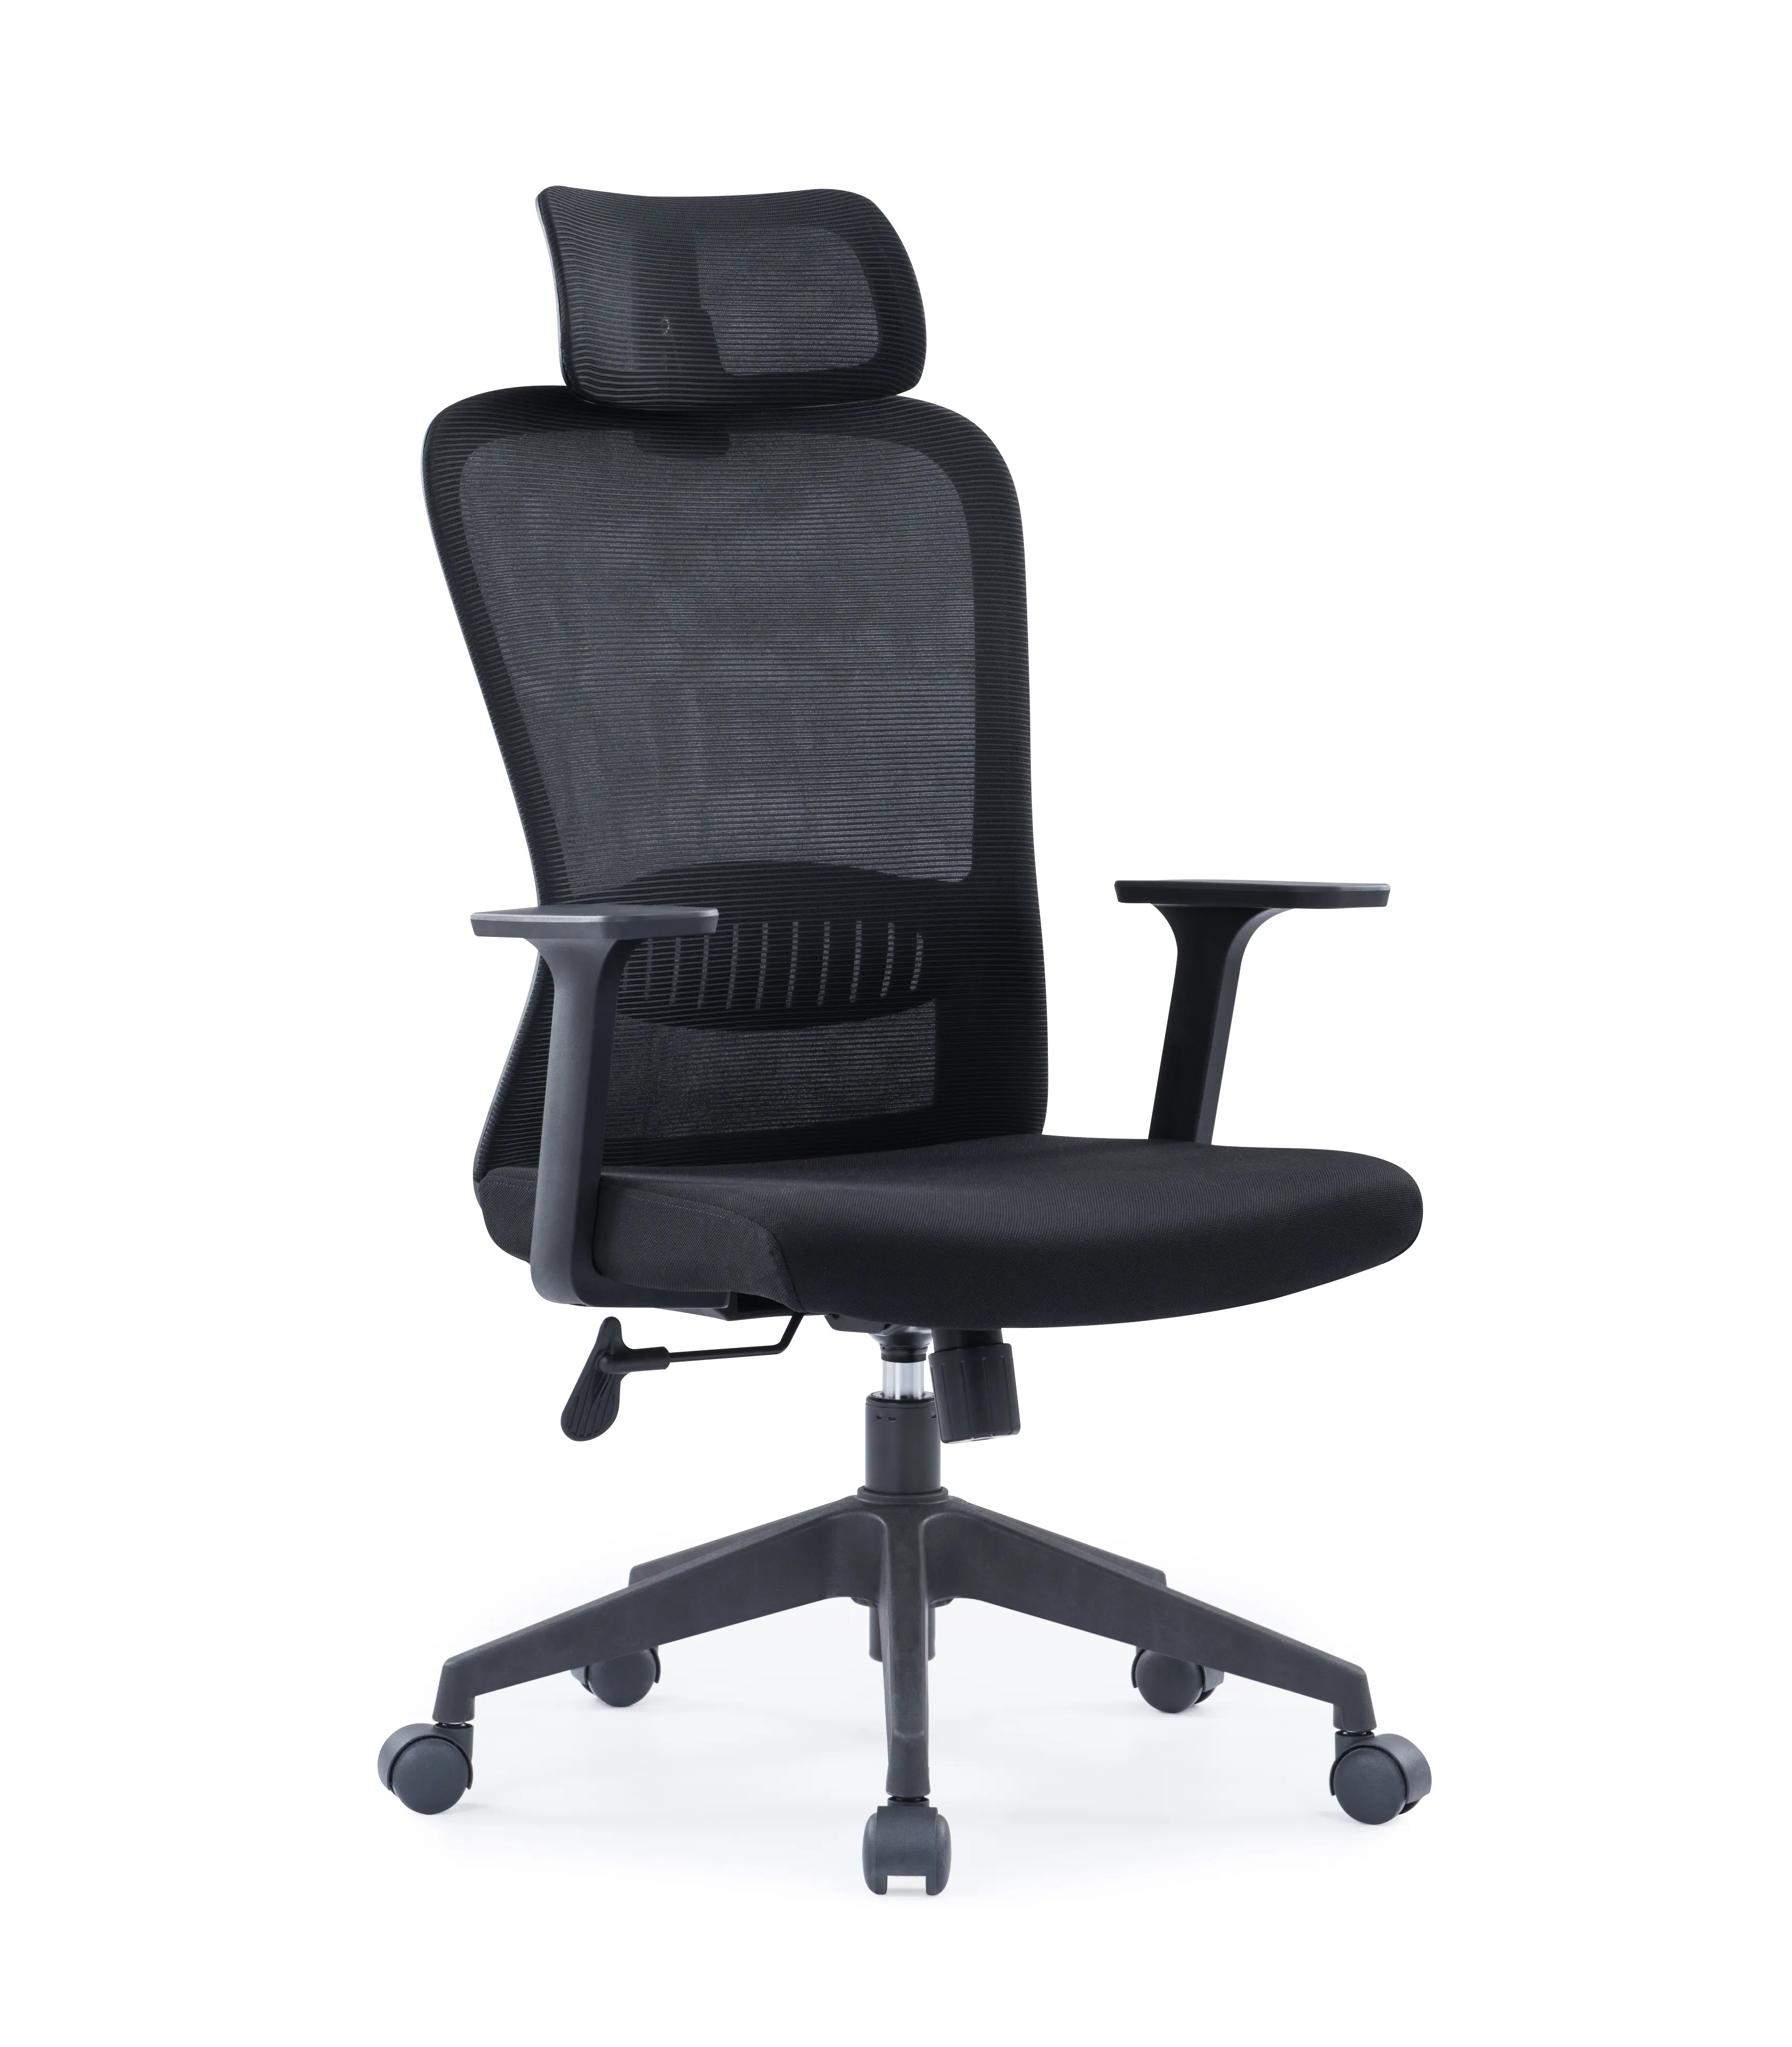 Ergonomic Executive Swivel Black Fabric High Back Mesh Office Chair With Wheels Headrest